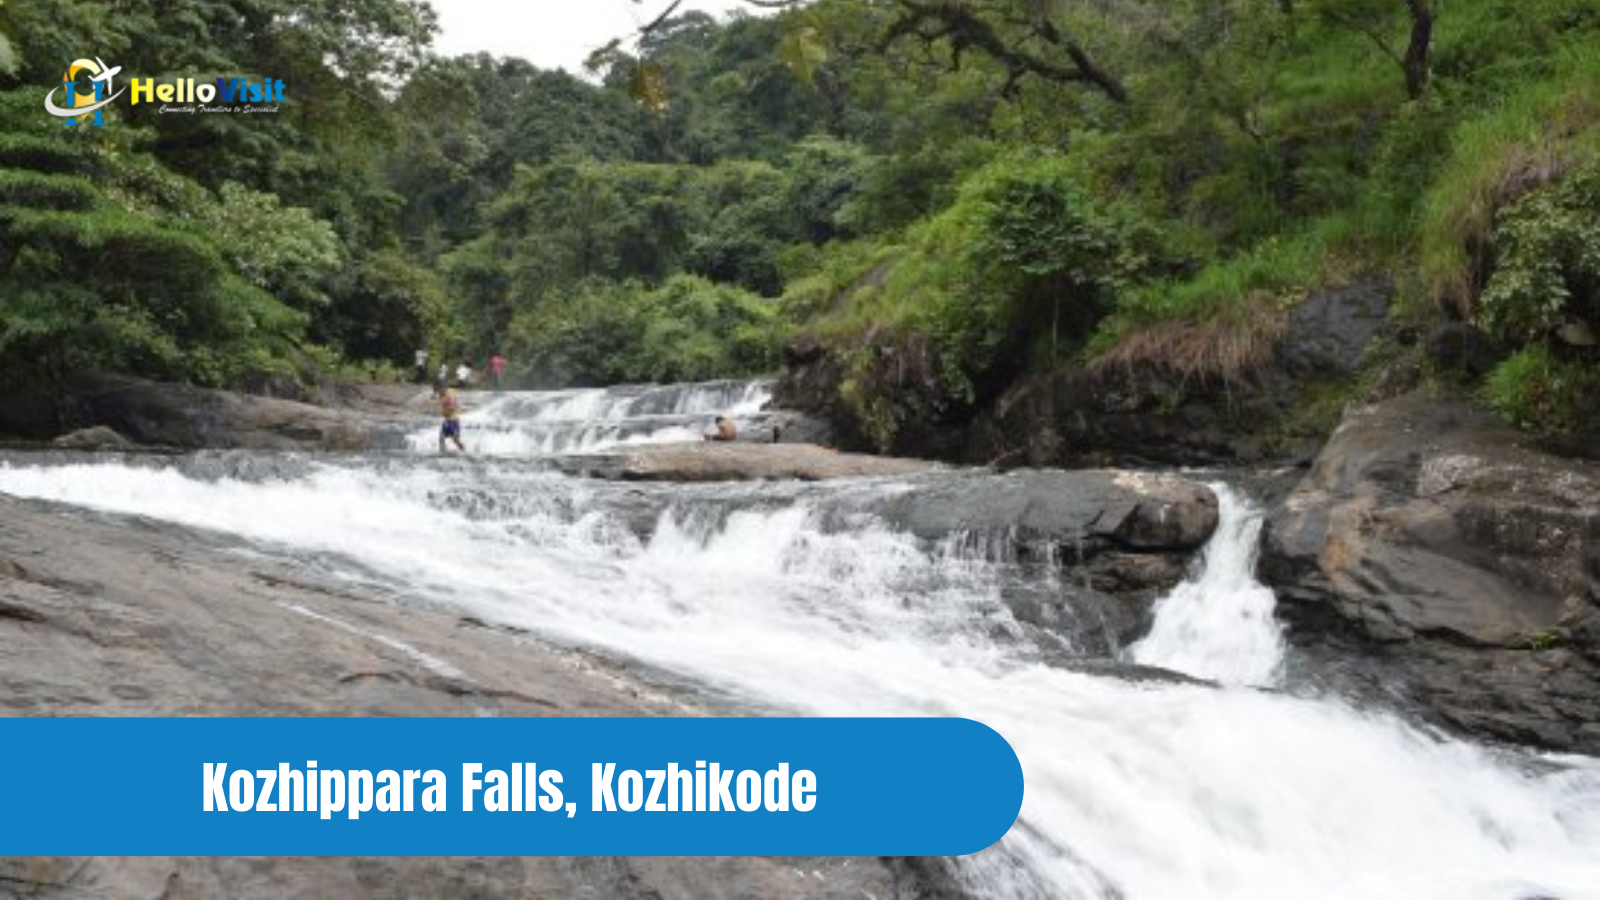 Kozhippara Falls, Kozhikode